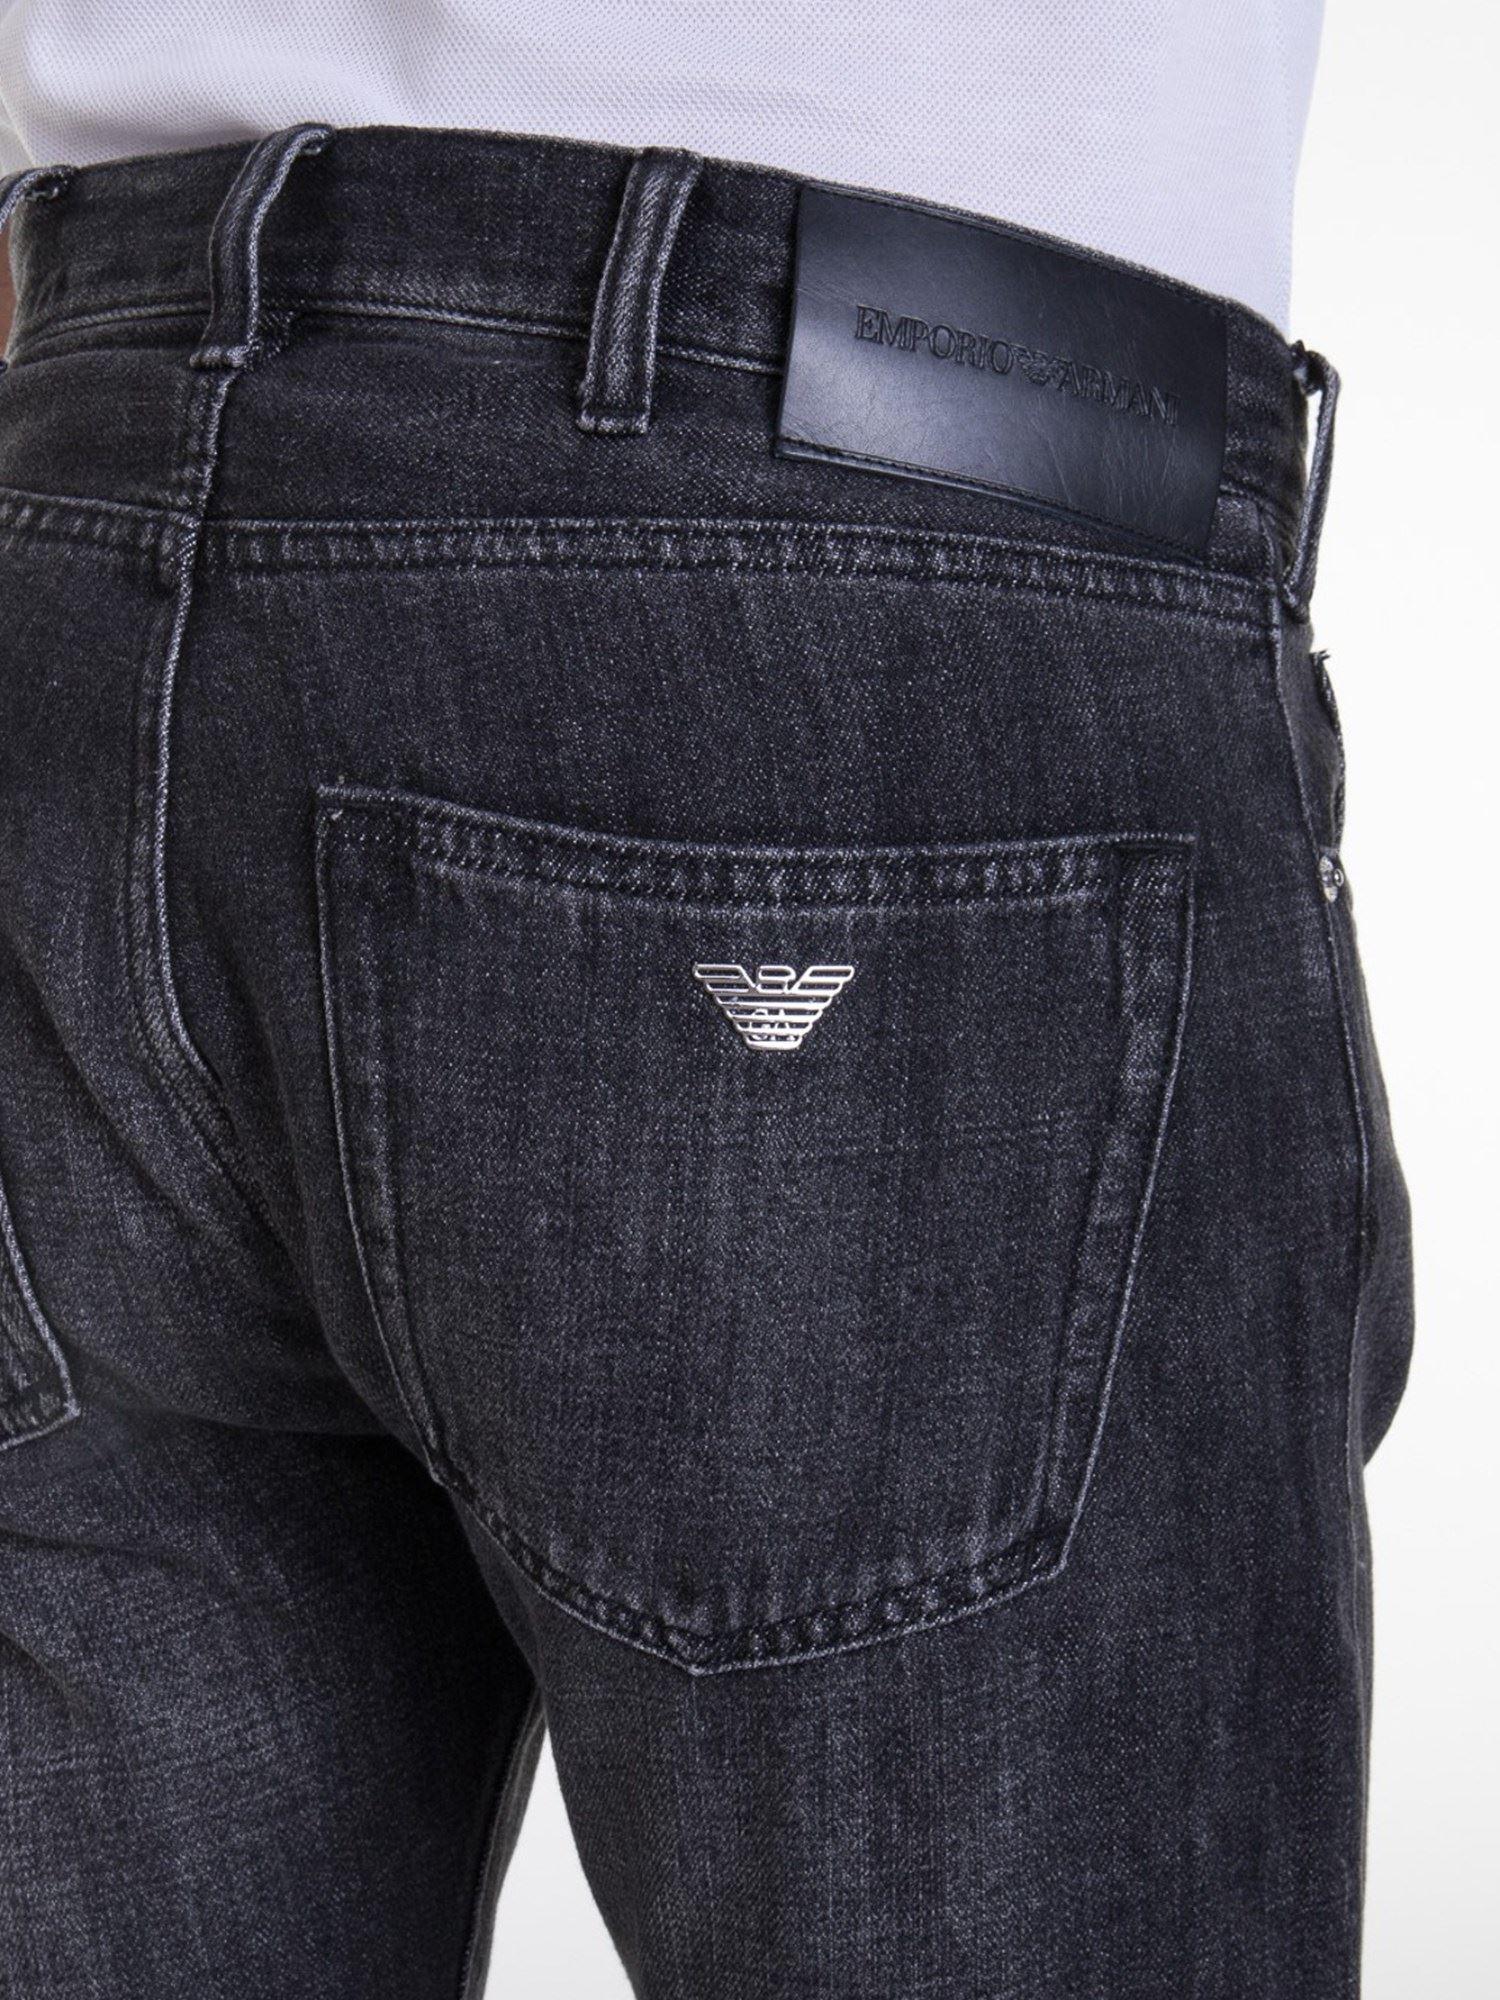 Emporio Armani Five-pocket Cotton Jeans in Grey (Gray) for Men - Lyst